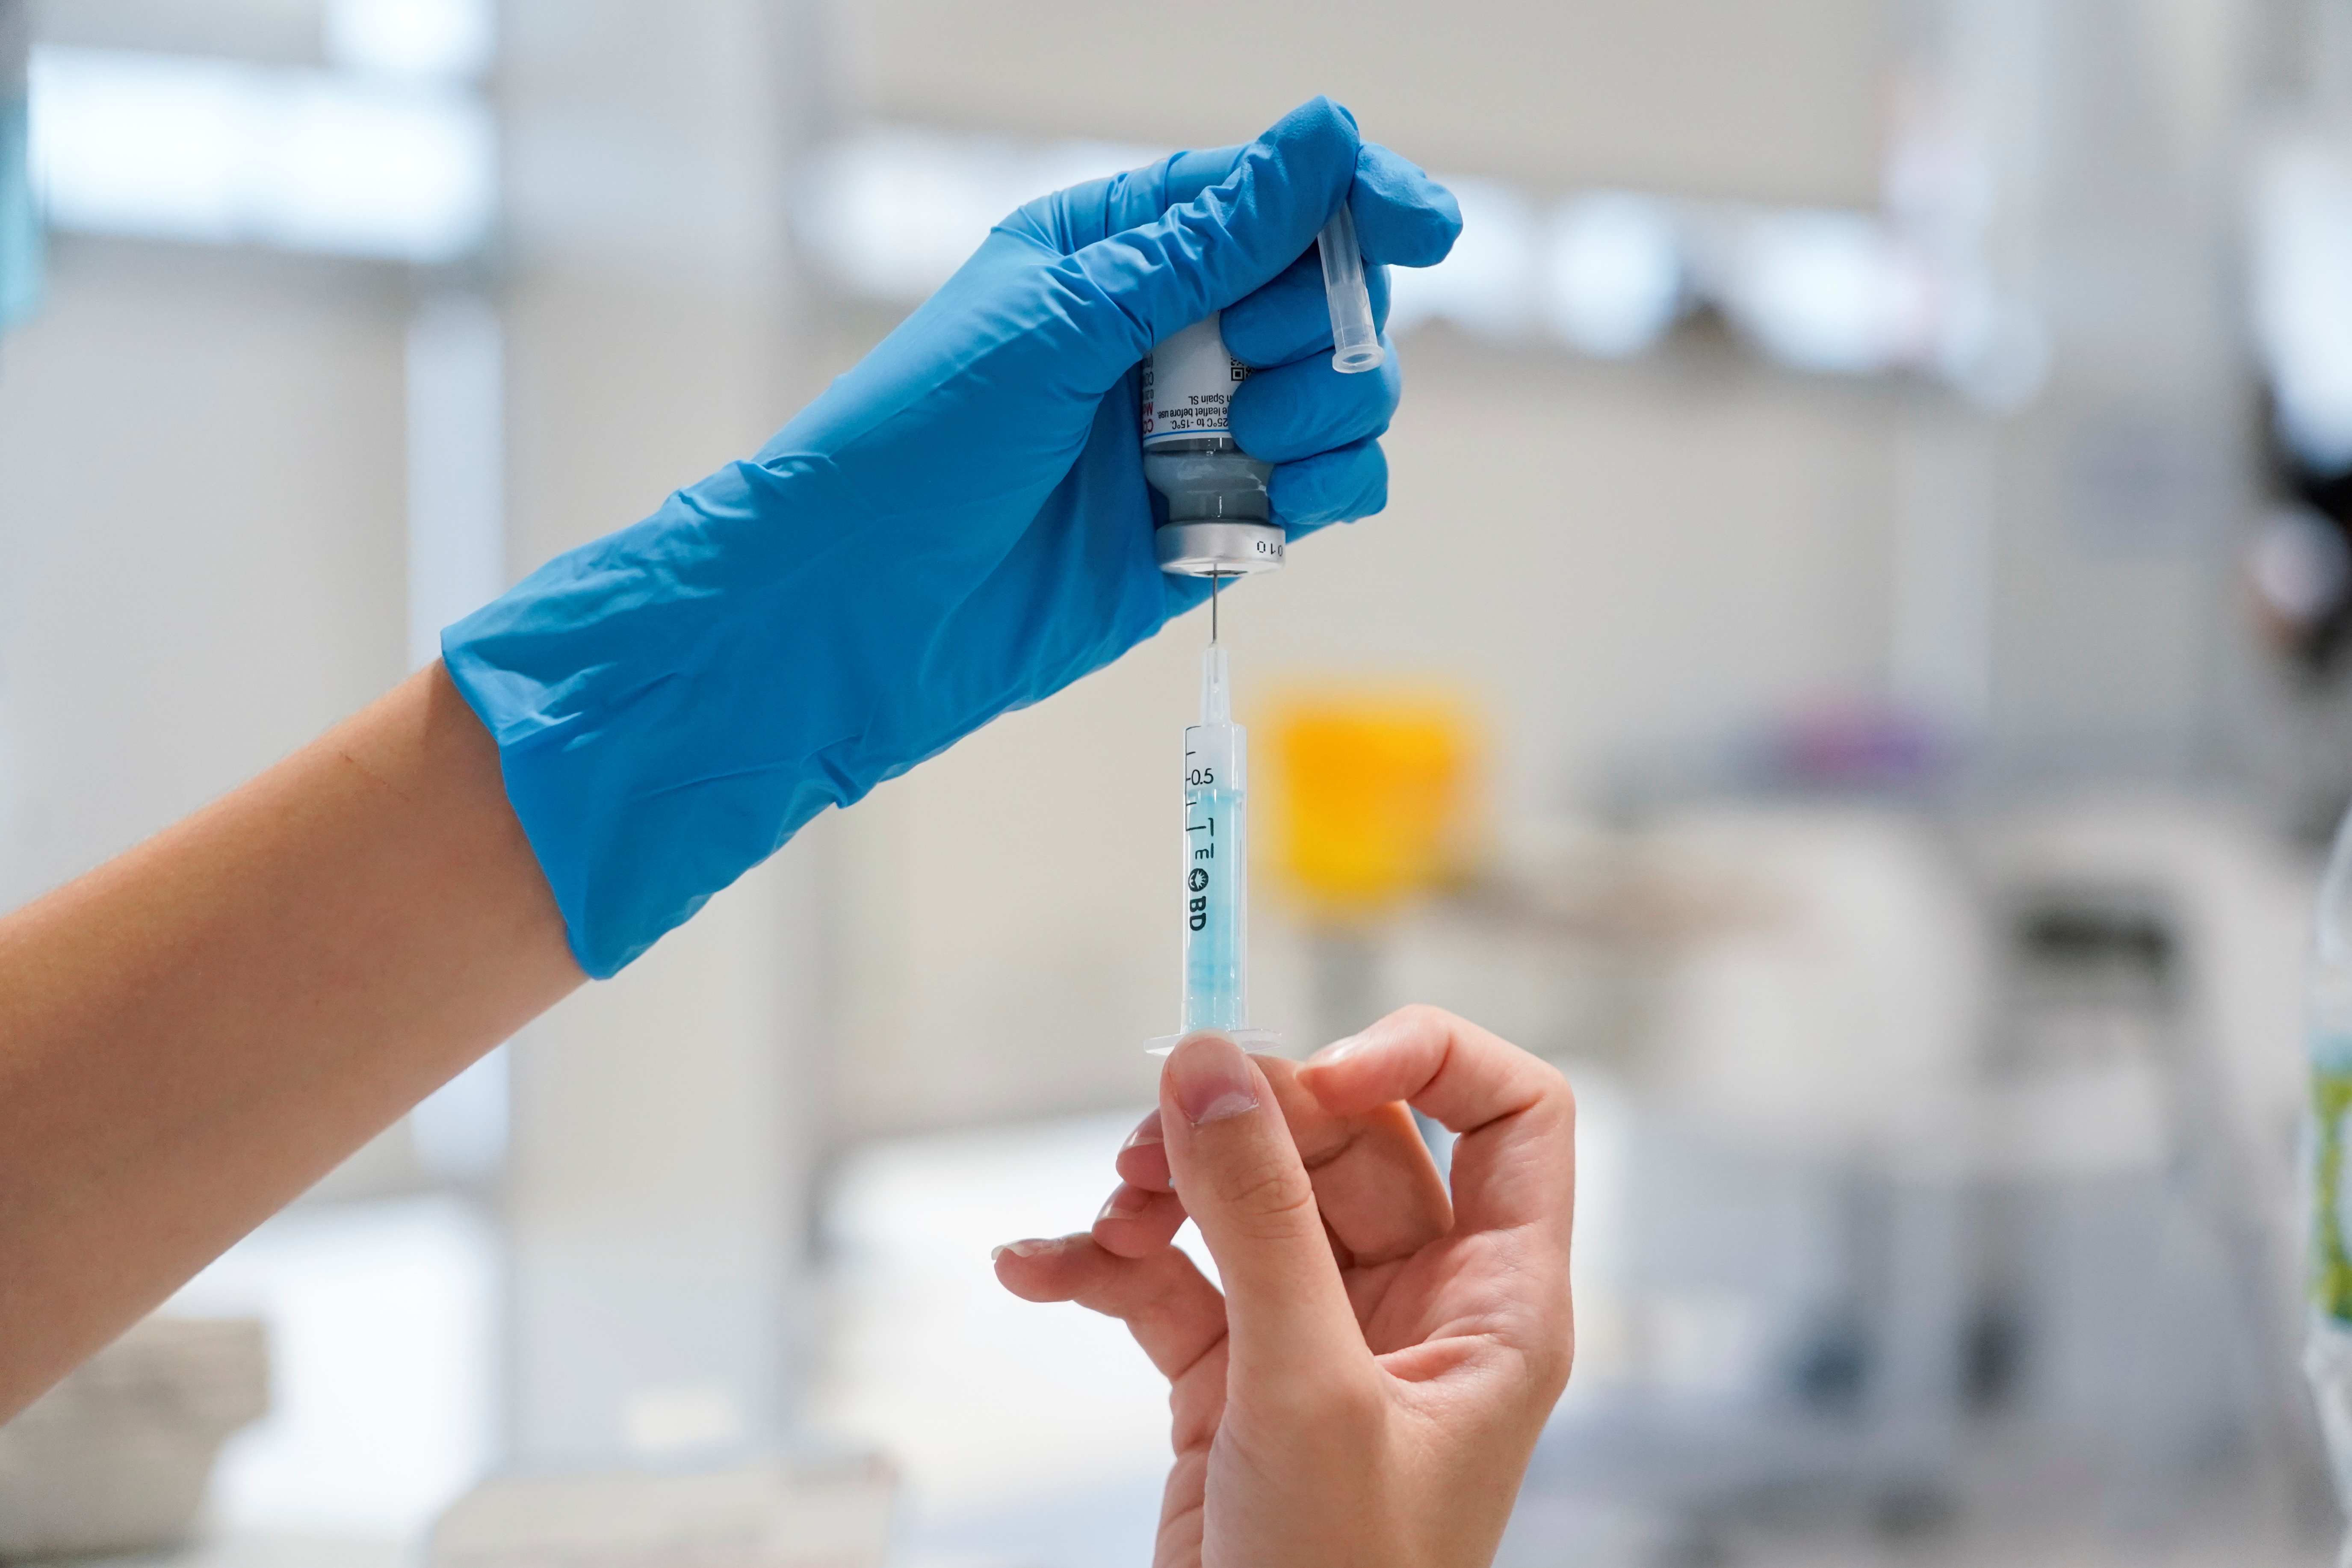 A nurse prepares a syringe with a dose of the Moderna coronavirus disease (COVID-19) vaccine at Enfermera Isabel Zendal hospital in Madrid, Spain, July 23, 2021. REUTERS/Juan Medina